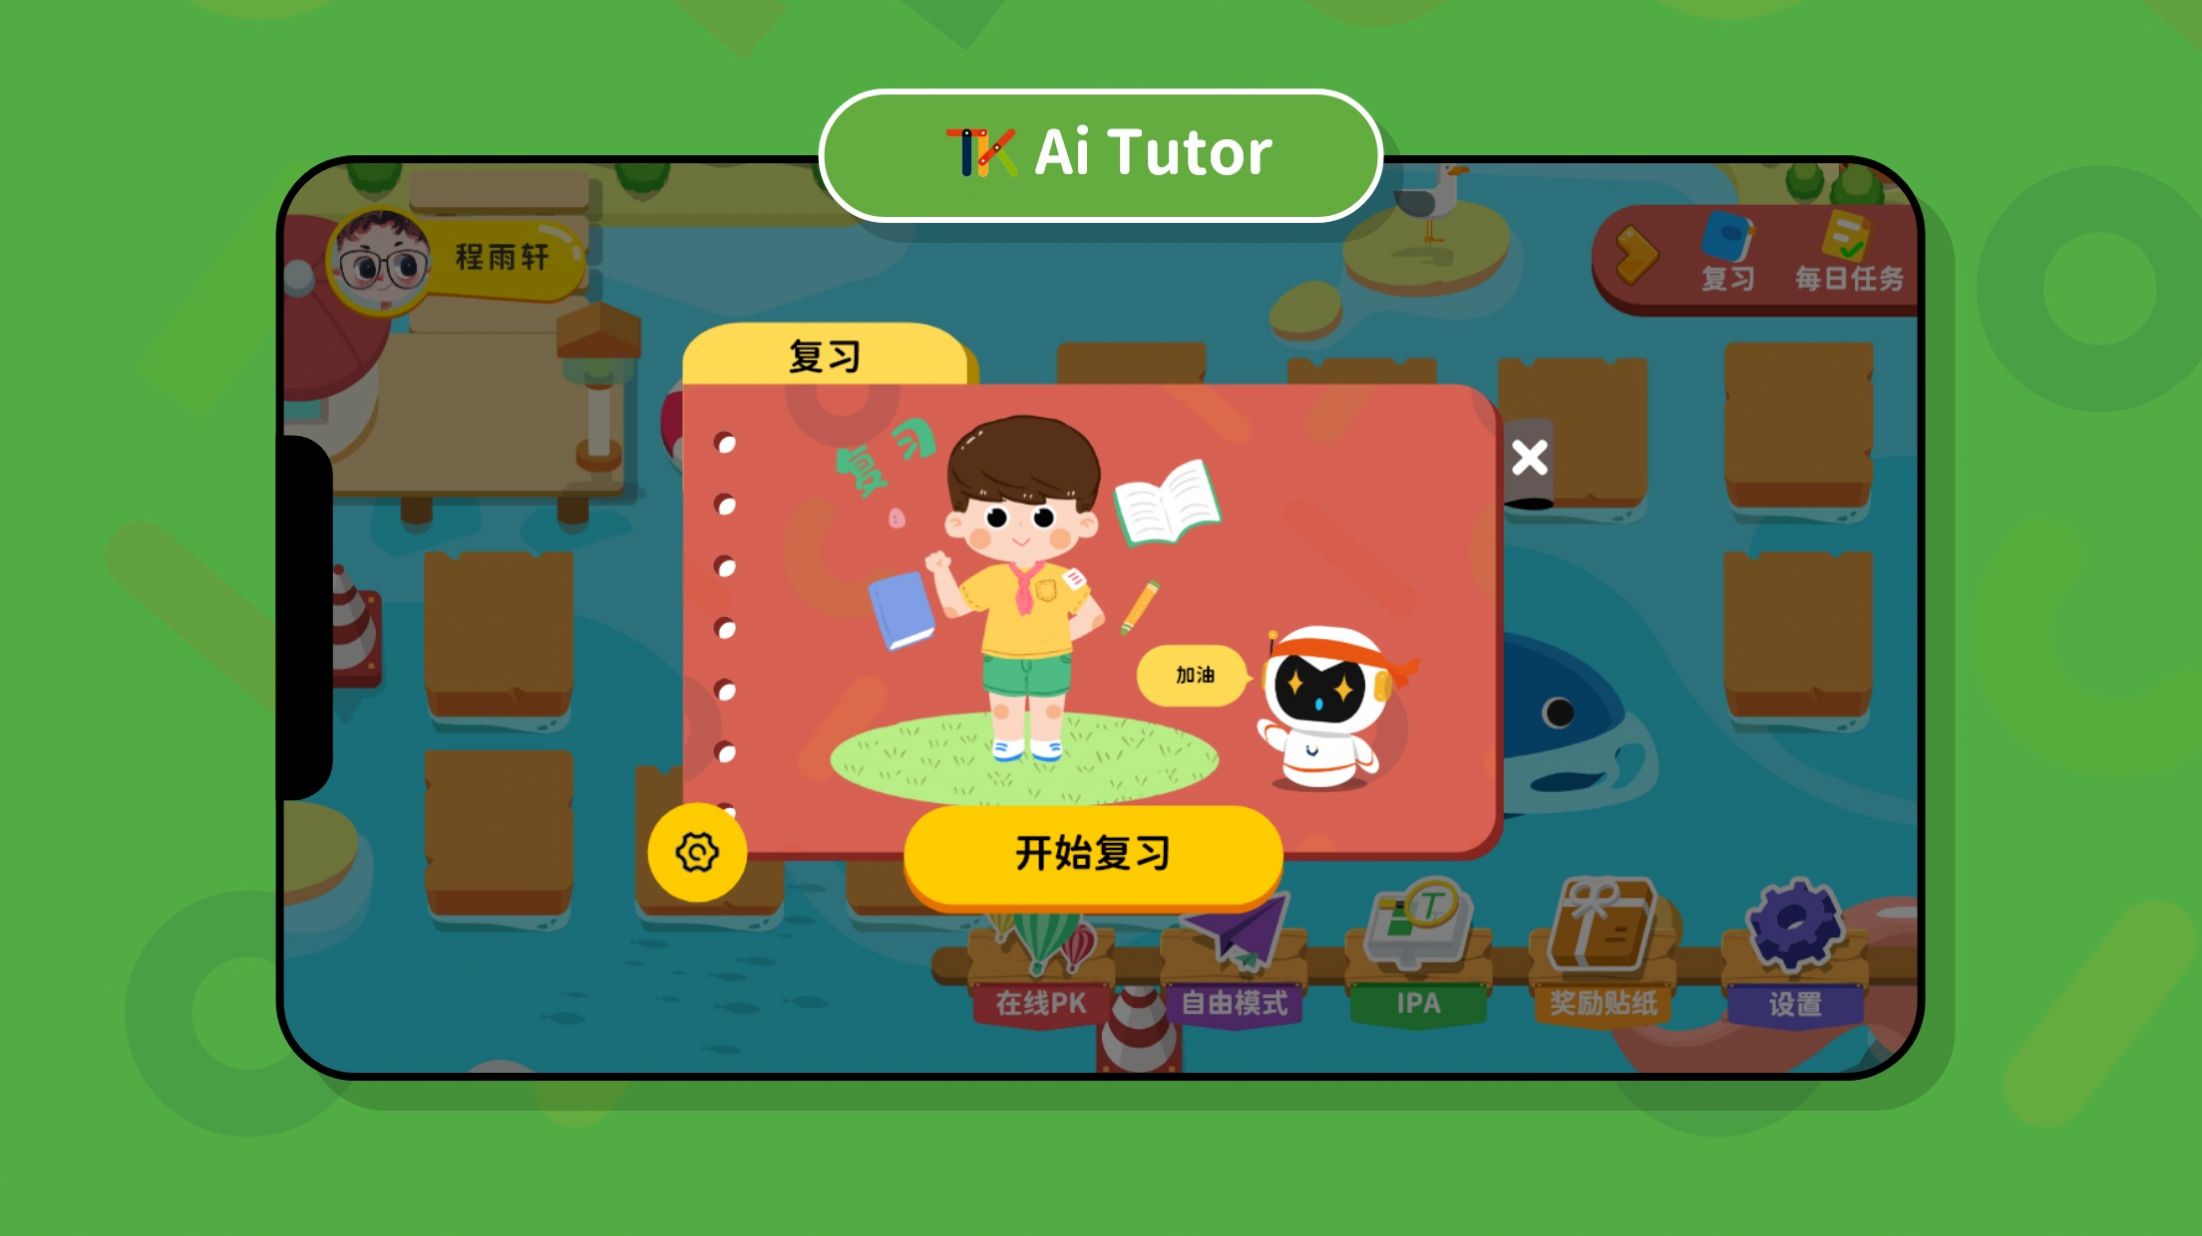 TK Tutor 1 on 1英语学习app官方版图1: